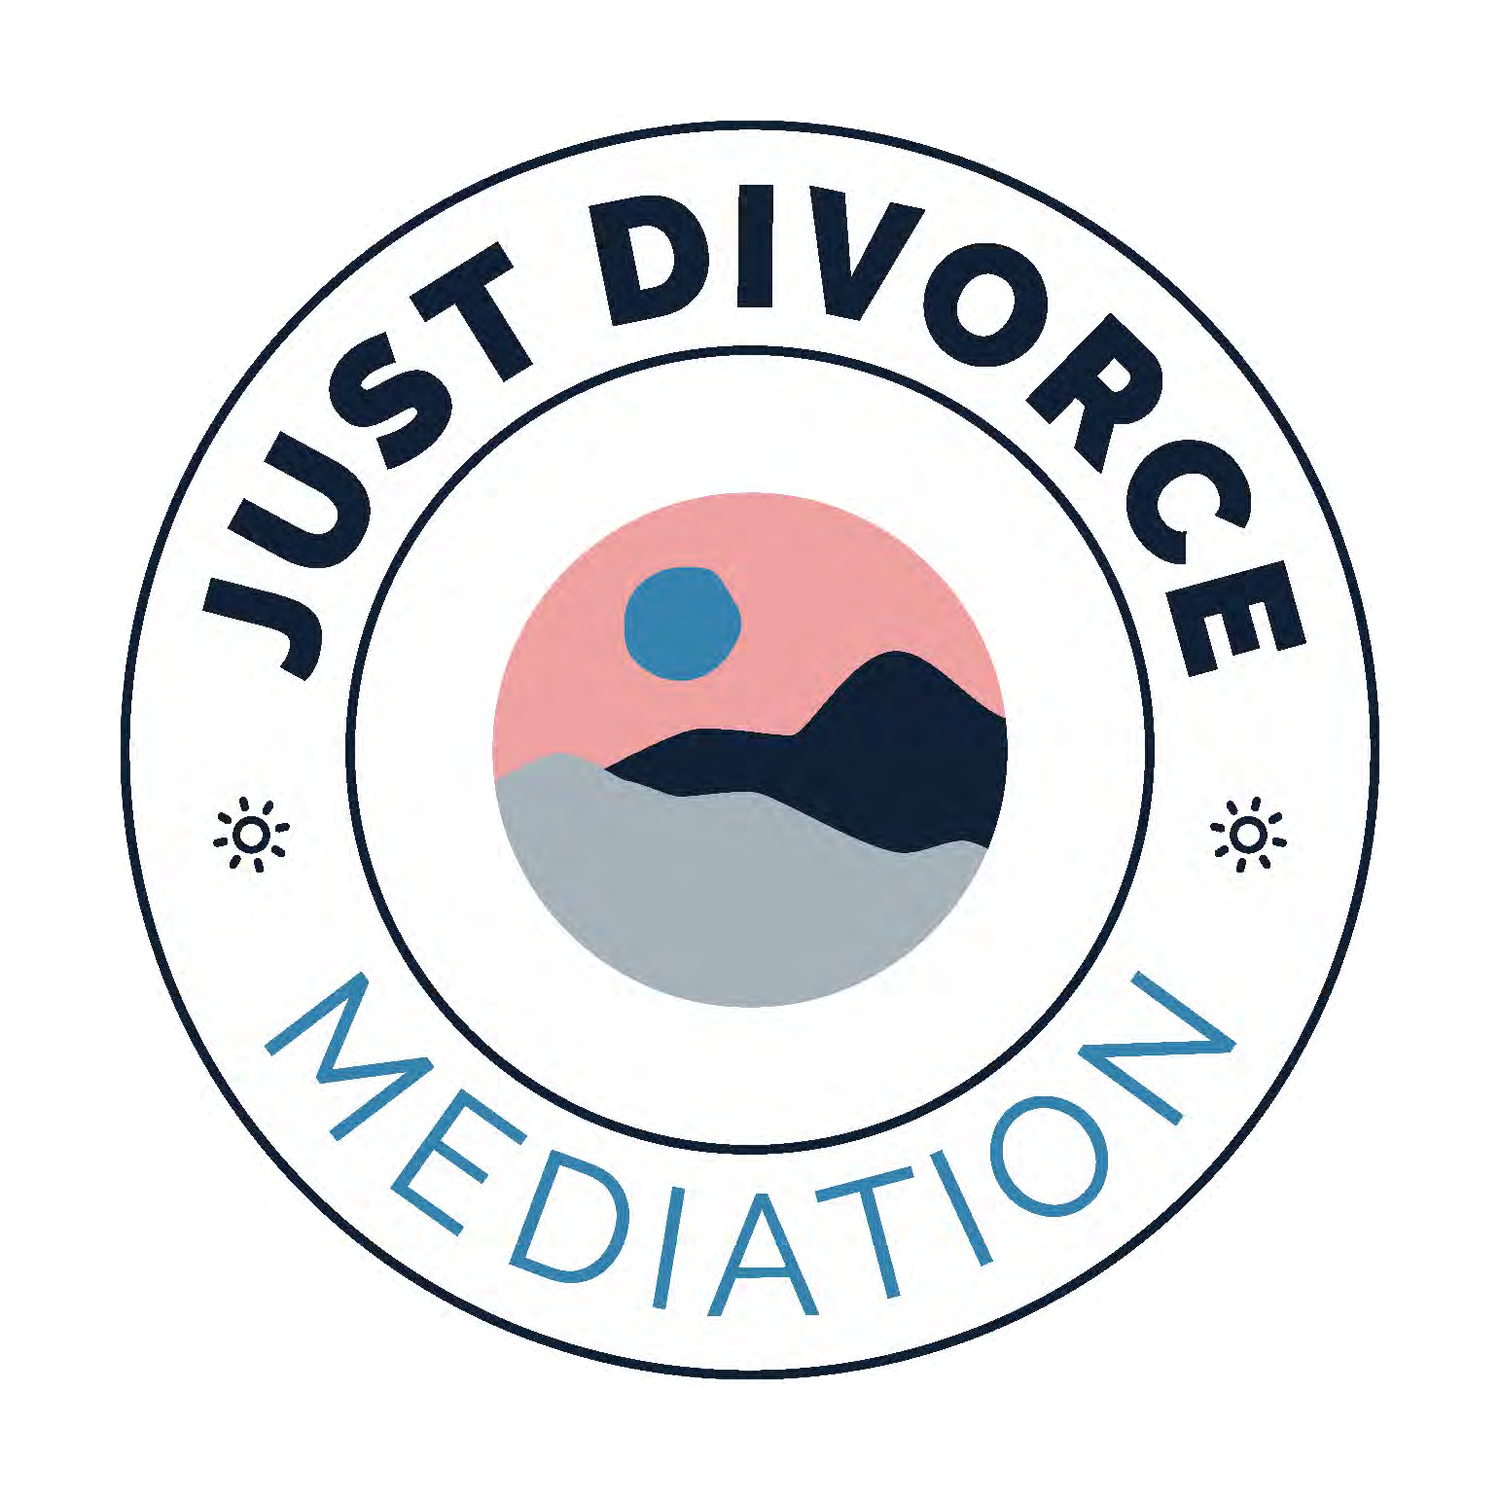 Just Divorce